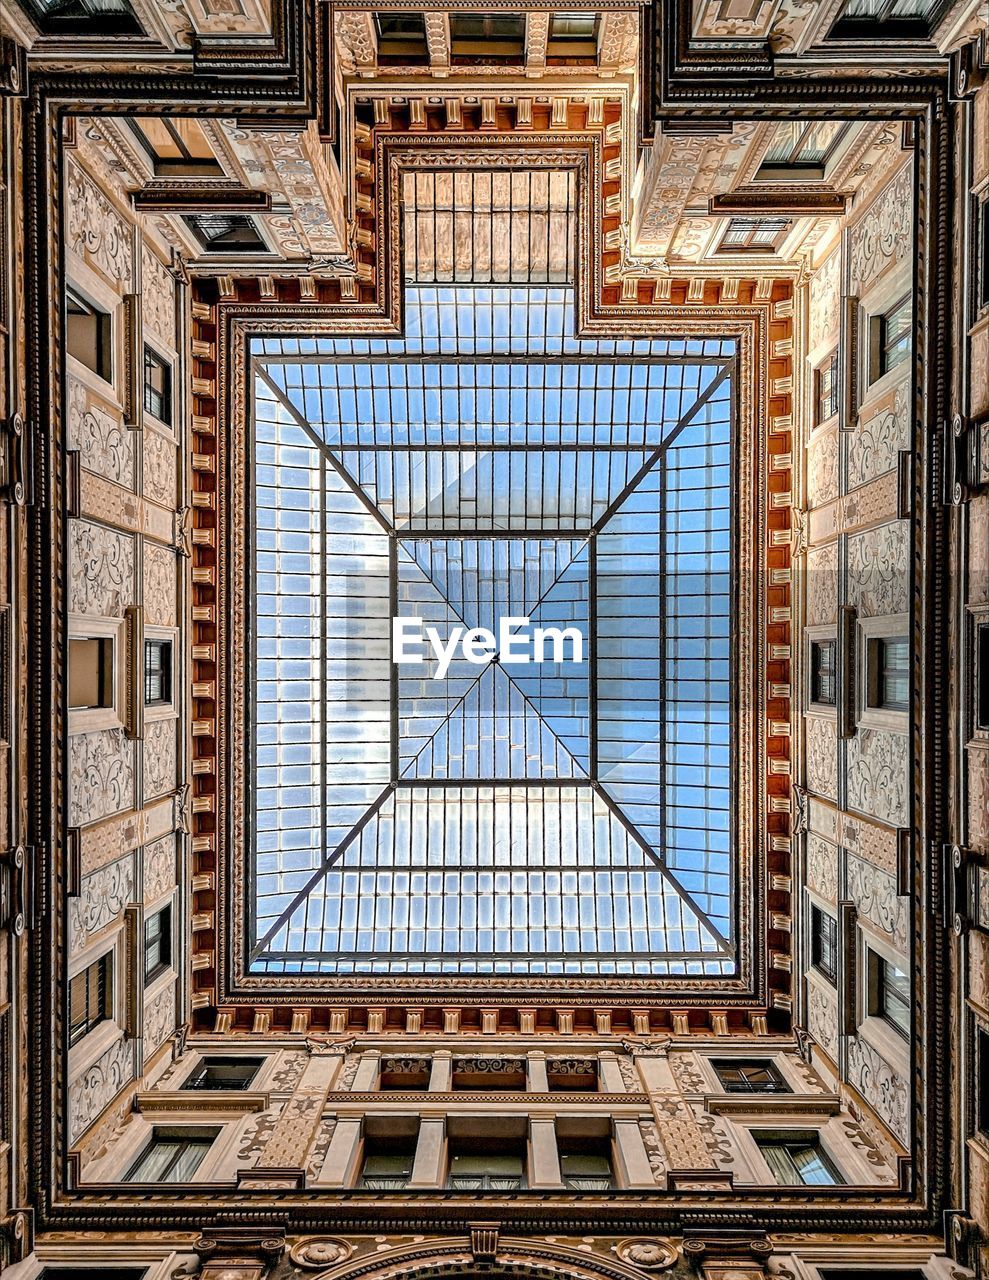 Directly below shot of building skylight